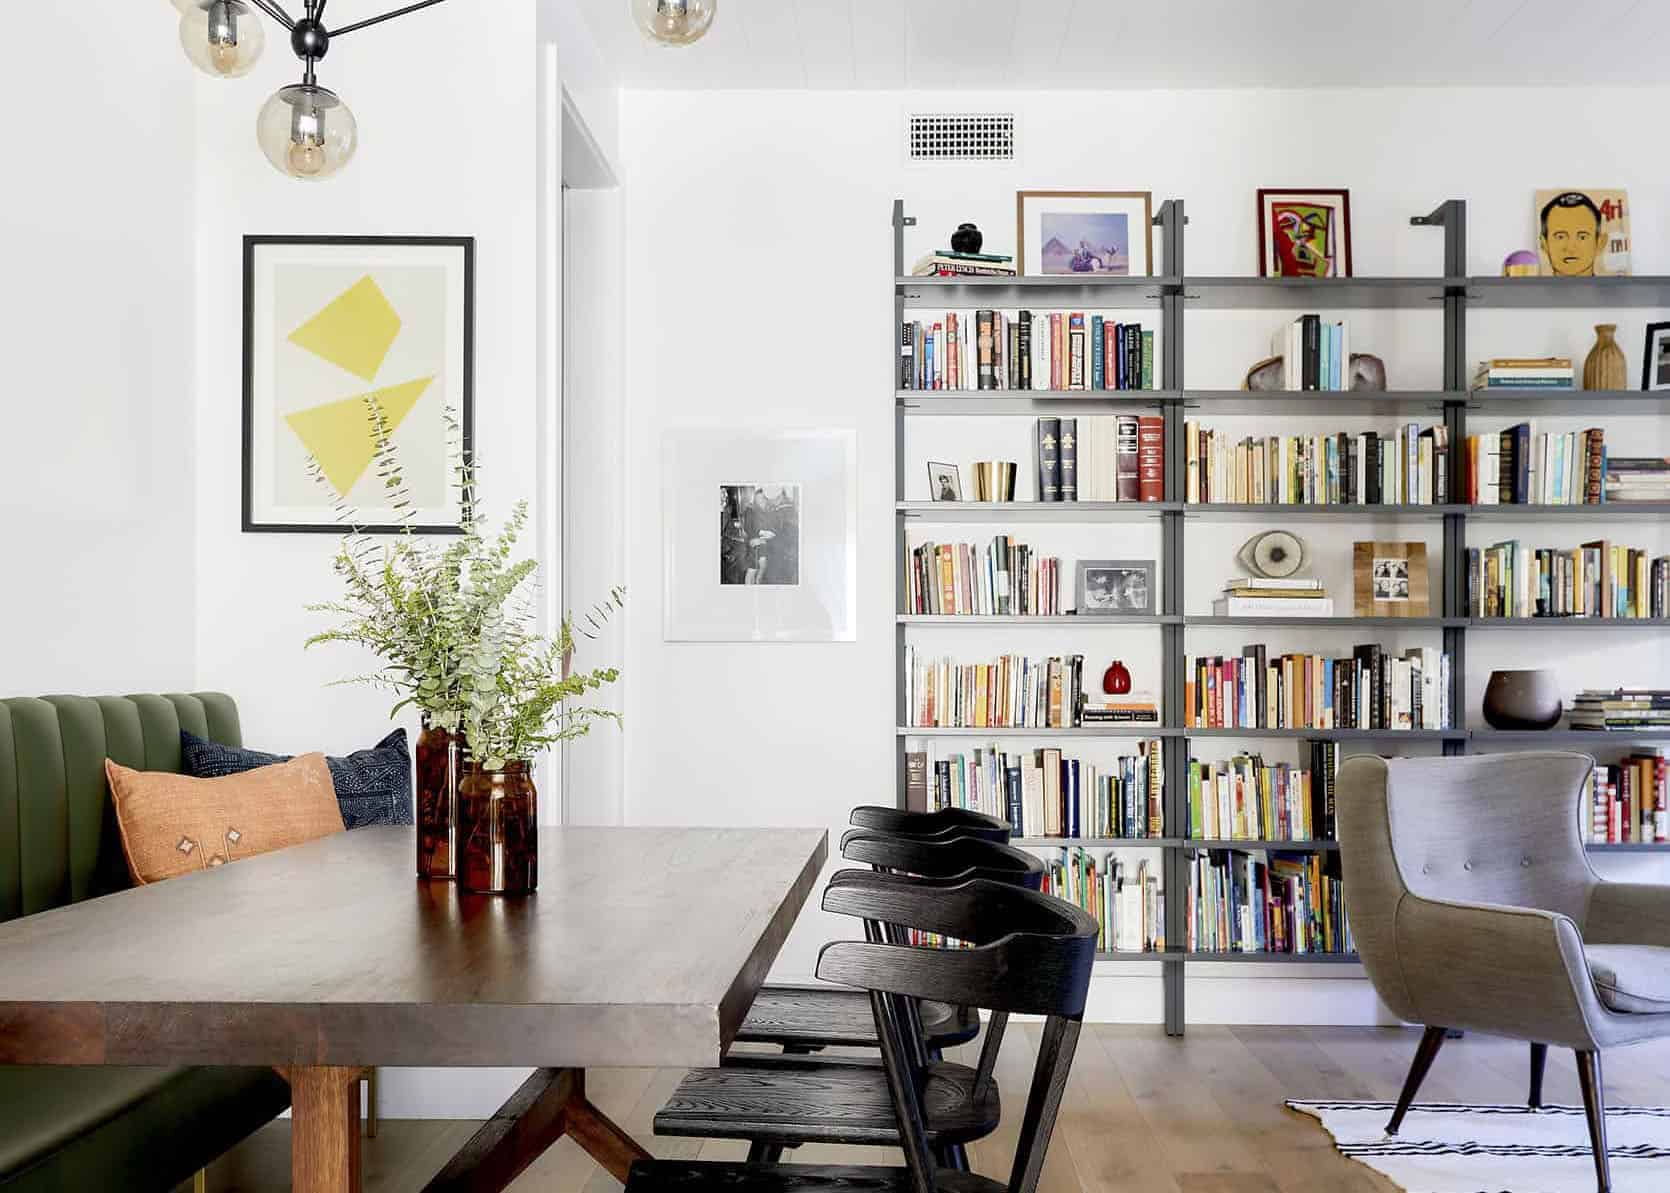 olourful living room decor with bookshelf on wall design